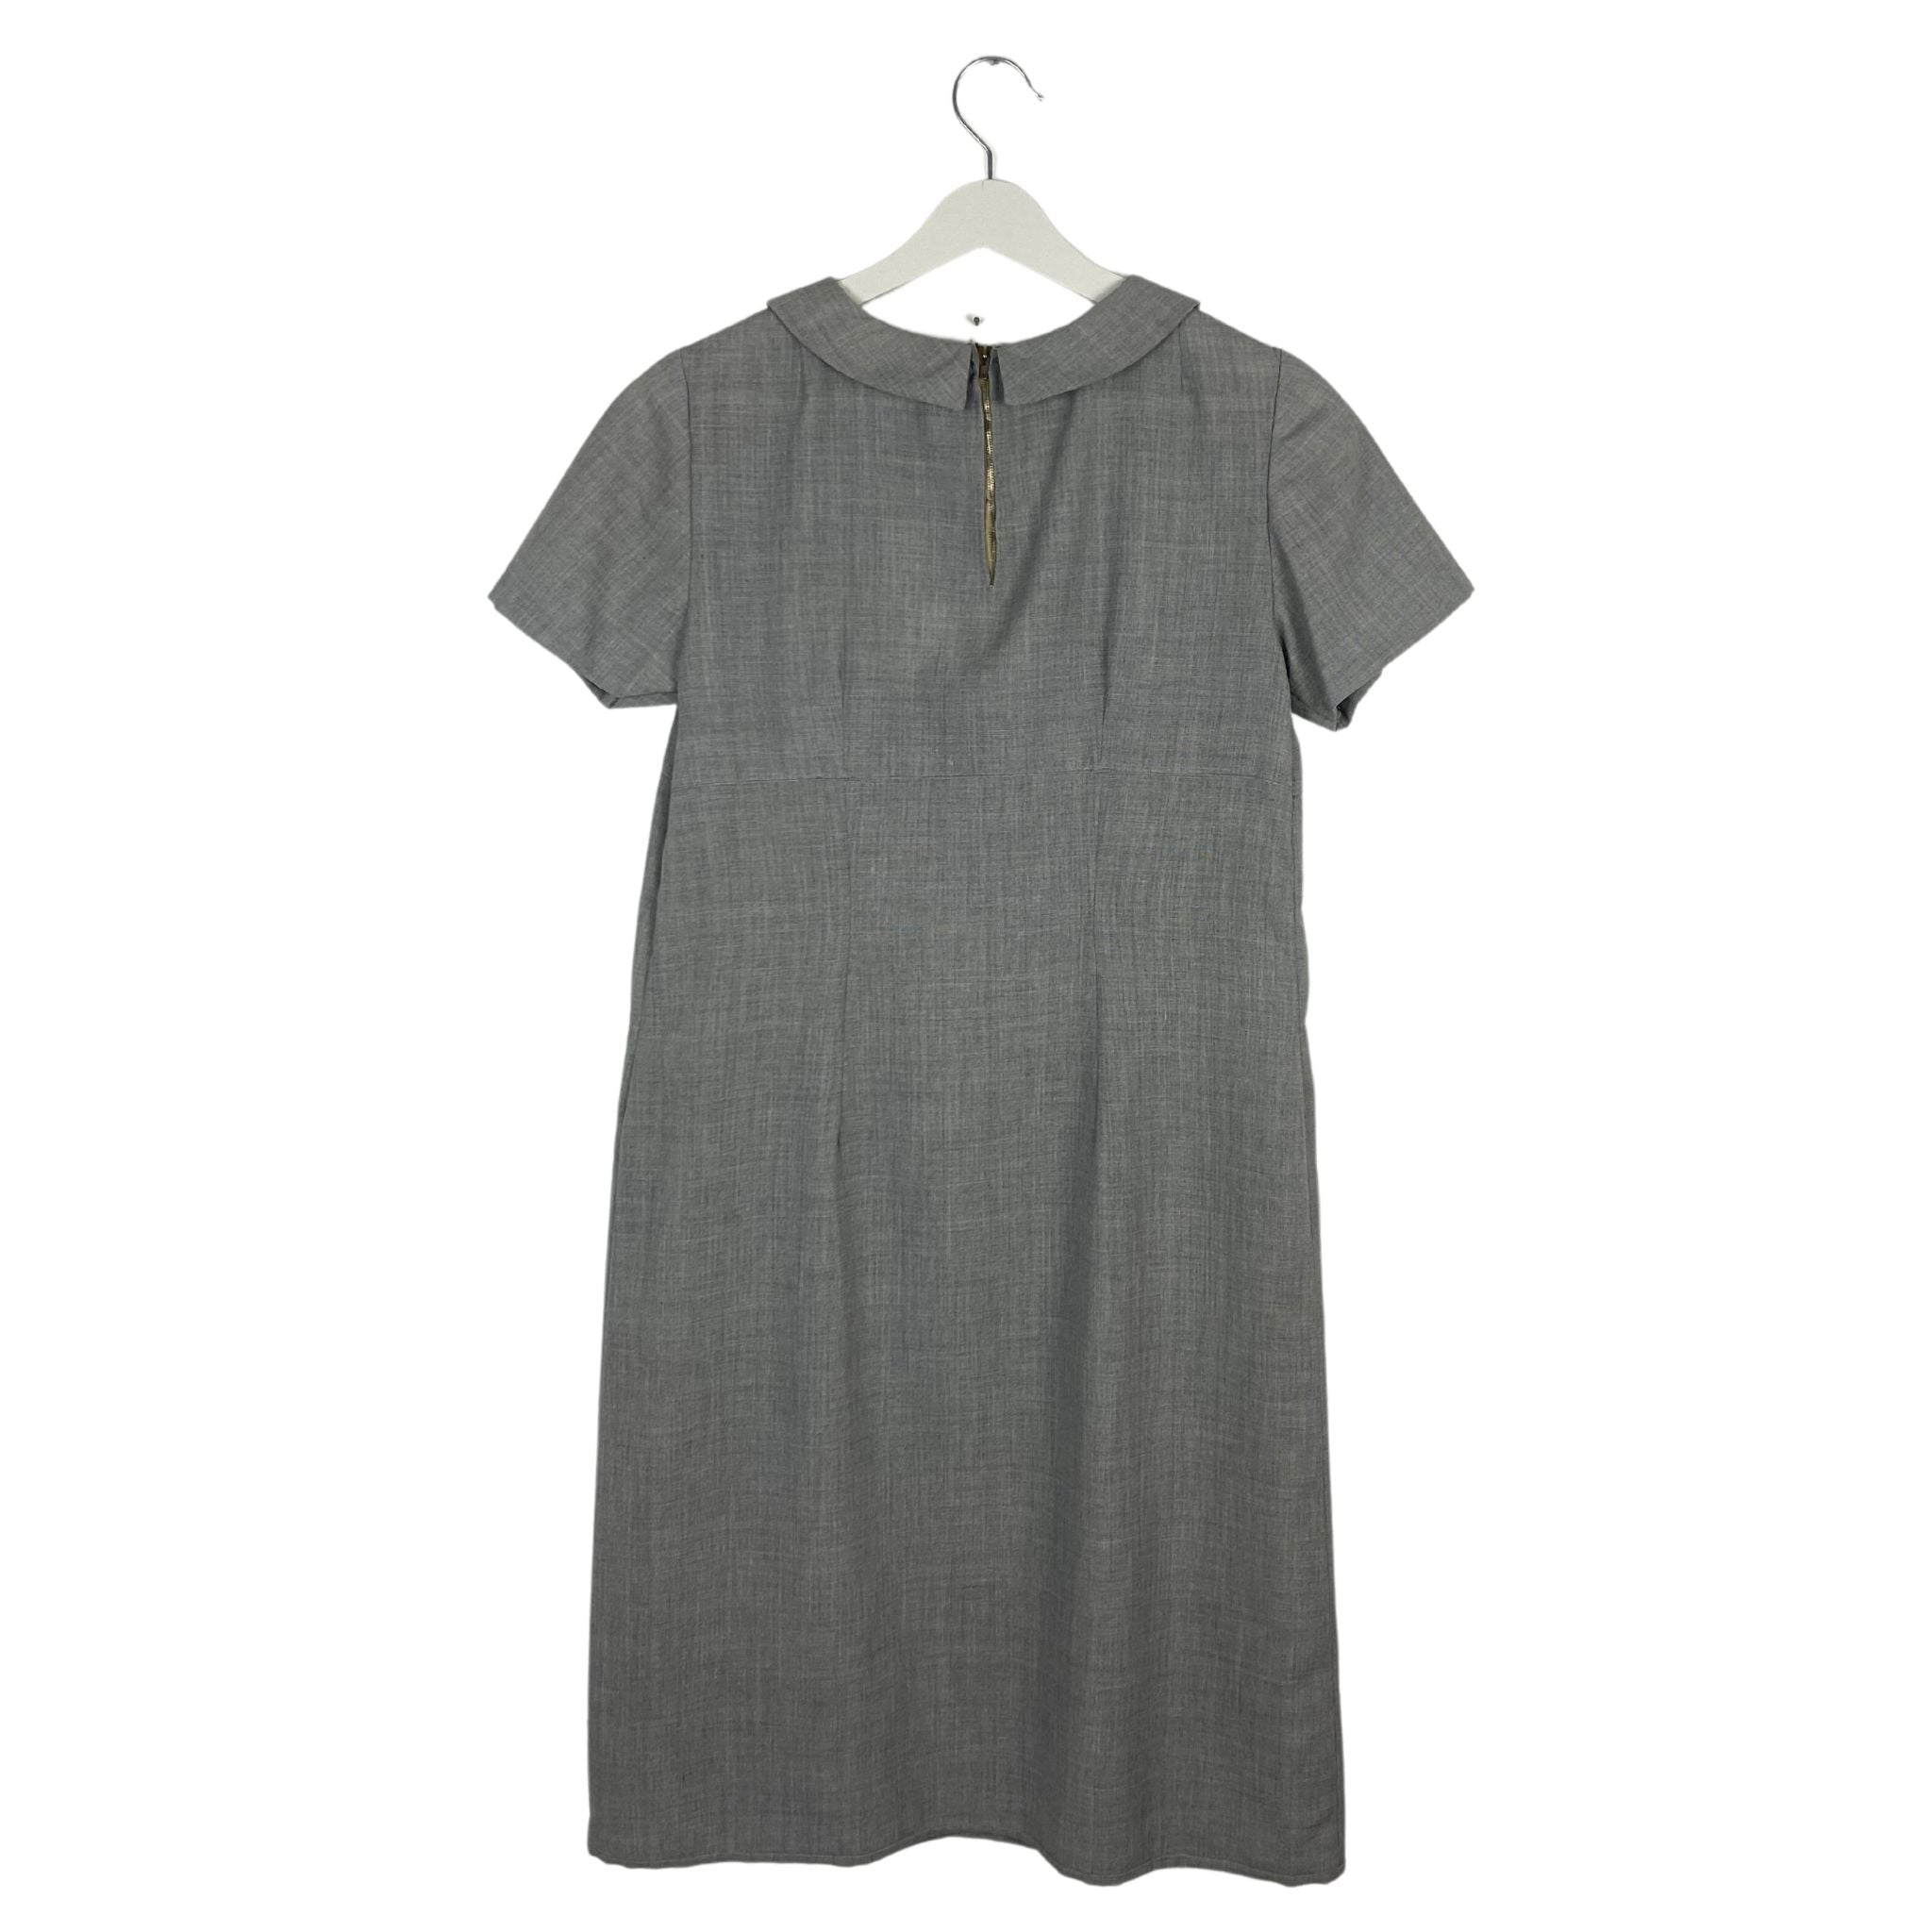 Vintage Kurzarm Kleid Grau S/M